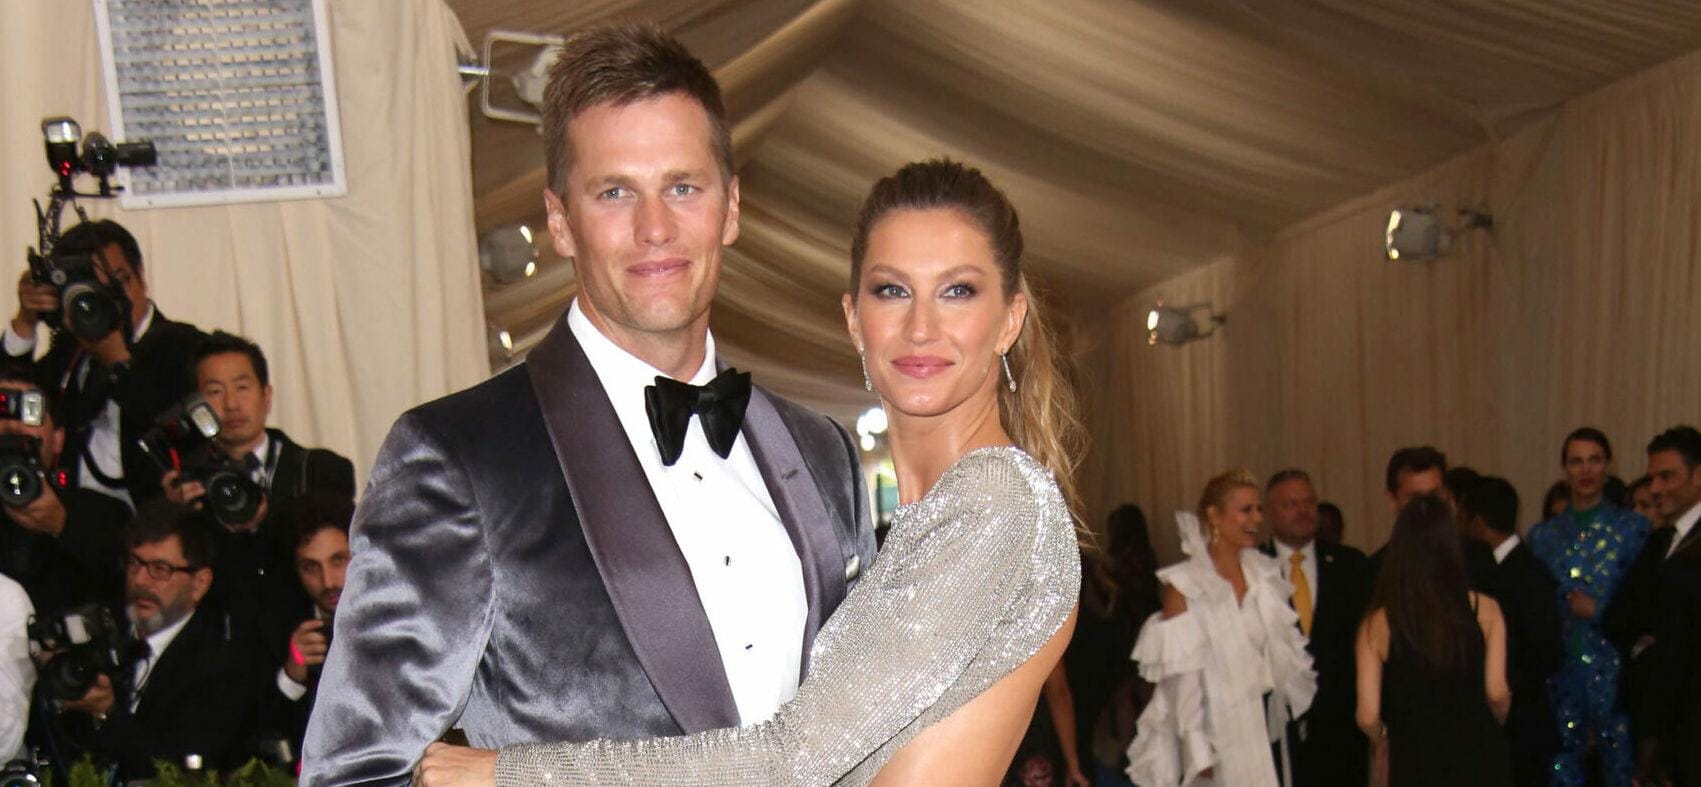 Gisele Bündchen Refutes Infidelity Claims Following Divorce from NFL Star Tom Brady